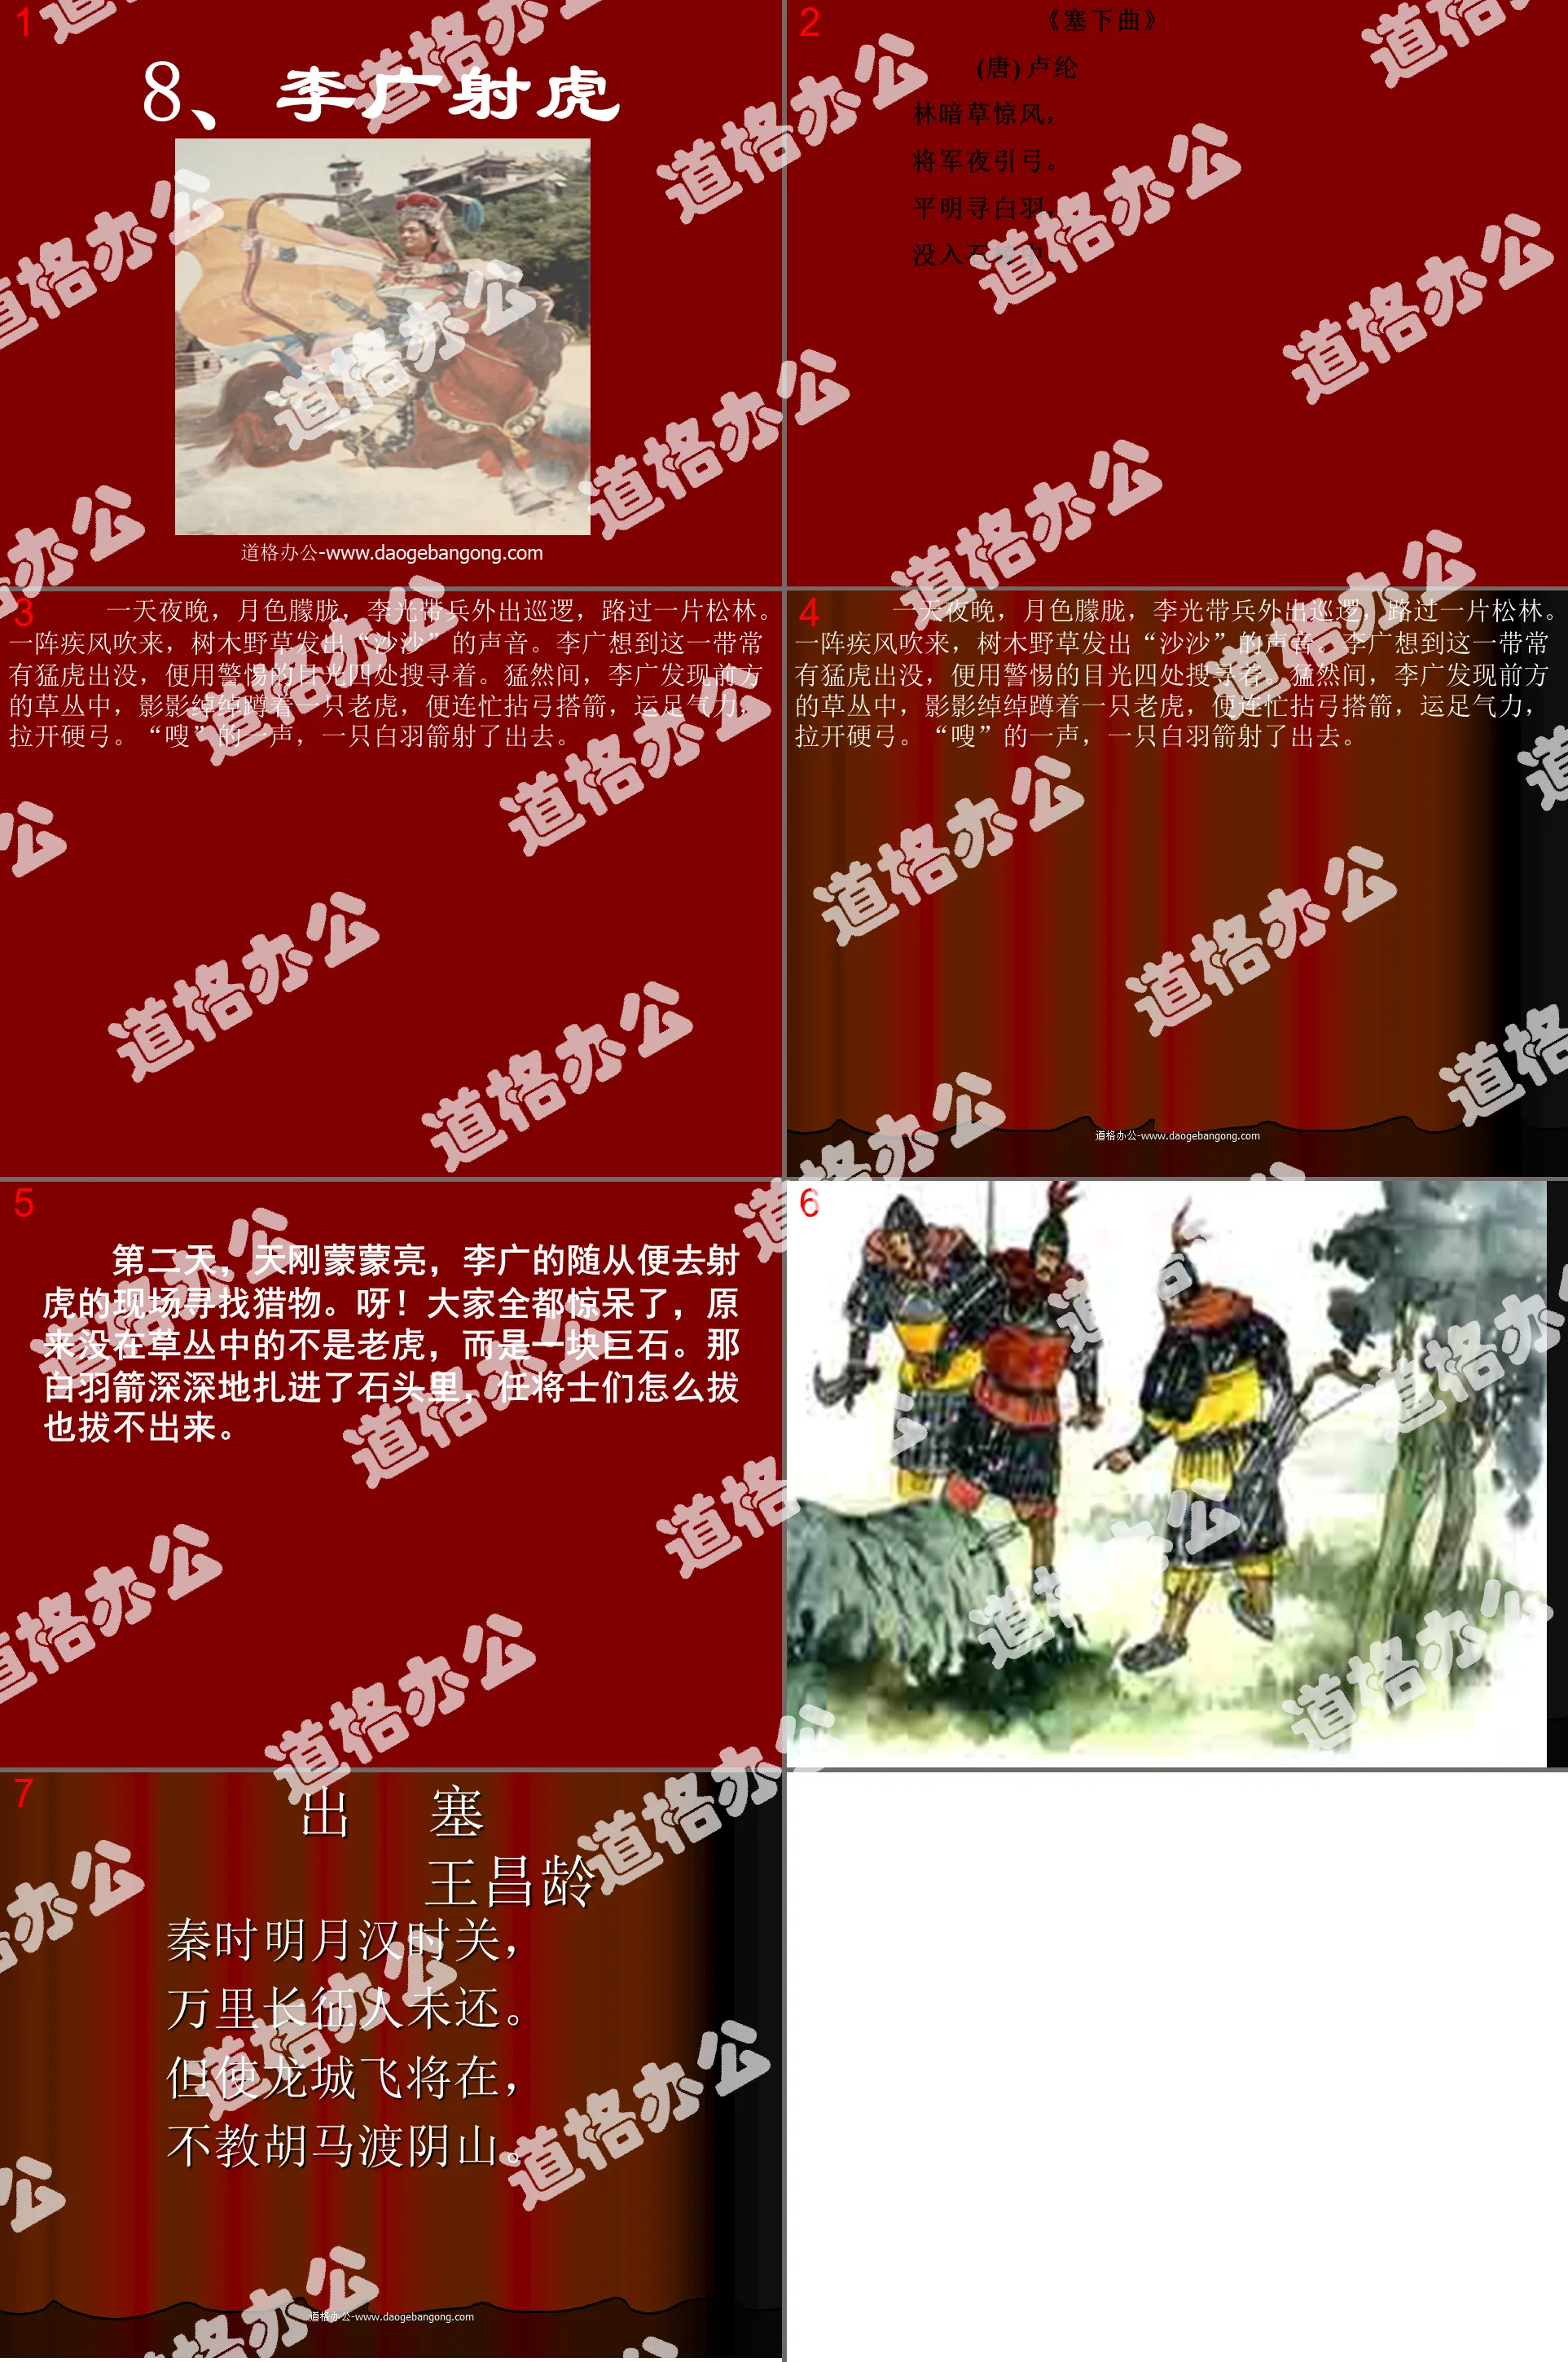 "Li Guang shoots the tiger" PPT courseware